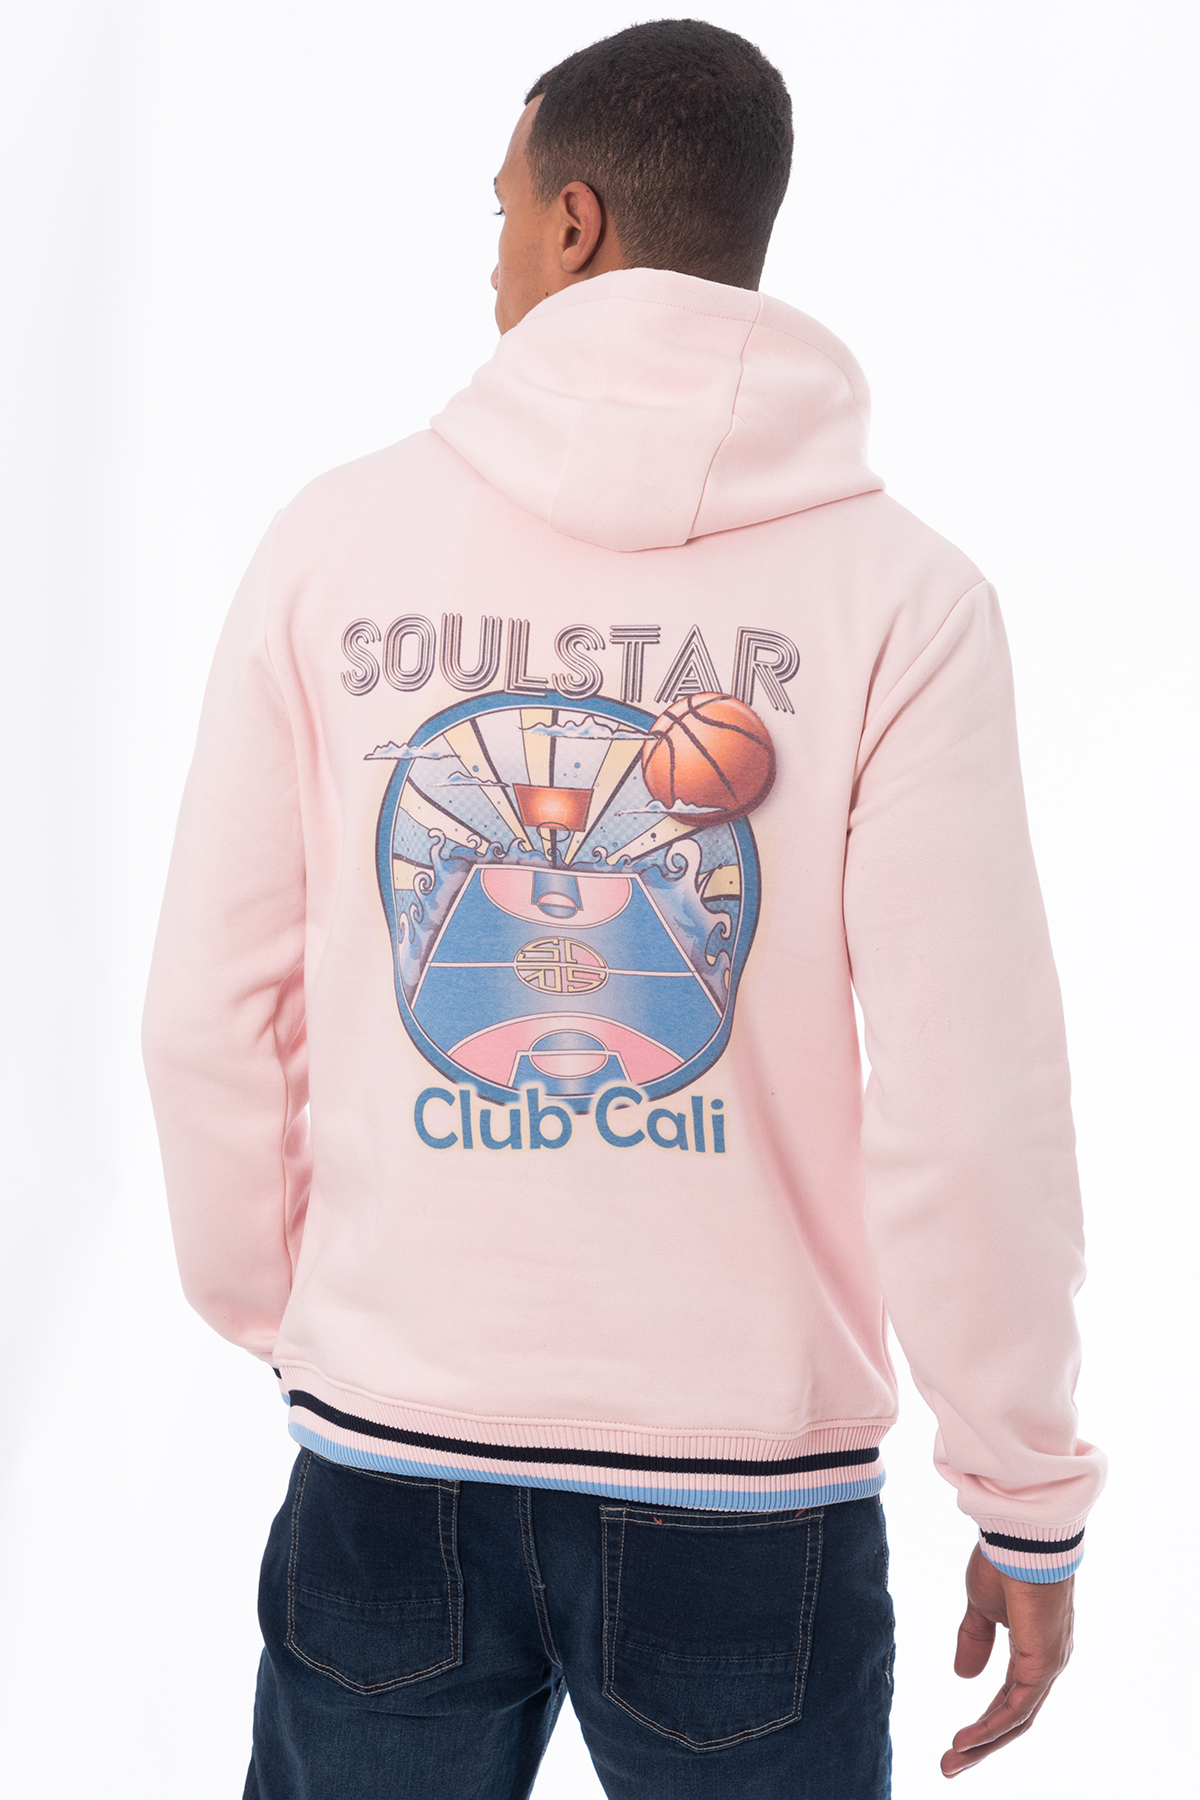 Club Cali Hoodie – Soulstar Clothing